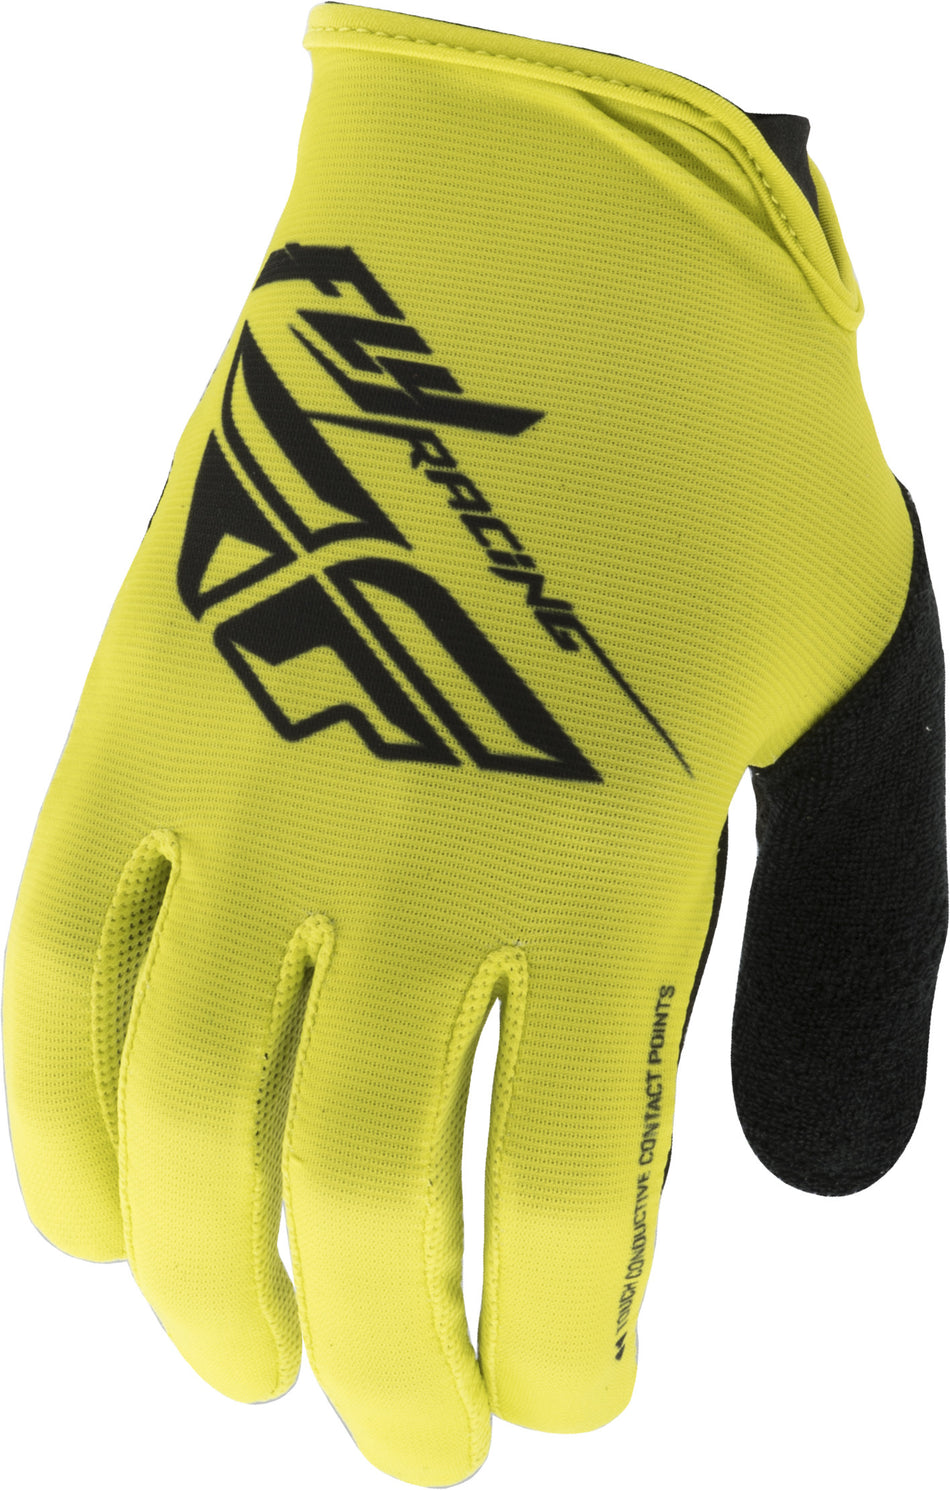 FLY RACING Media Gloves Lime/Black Sz 11 350-09511